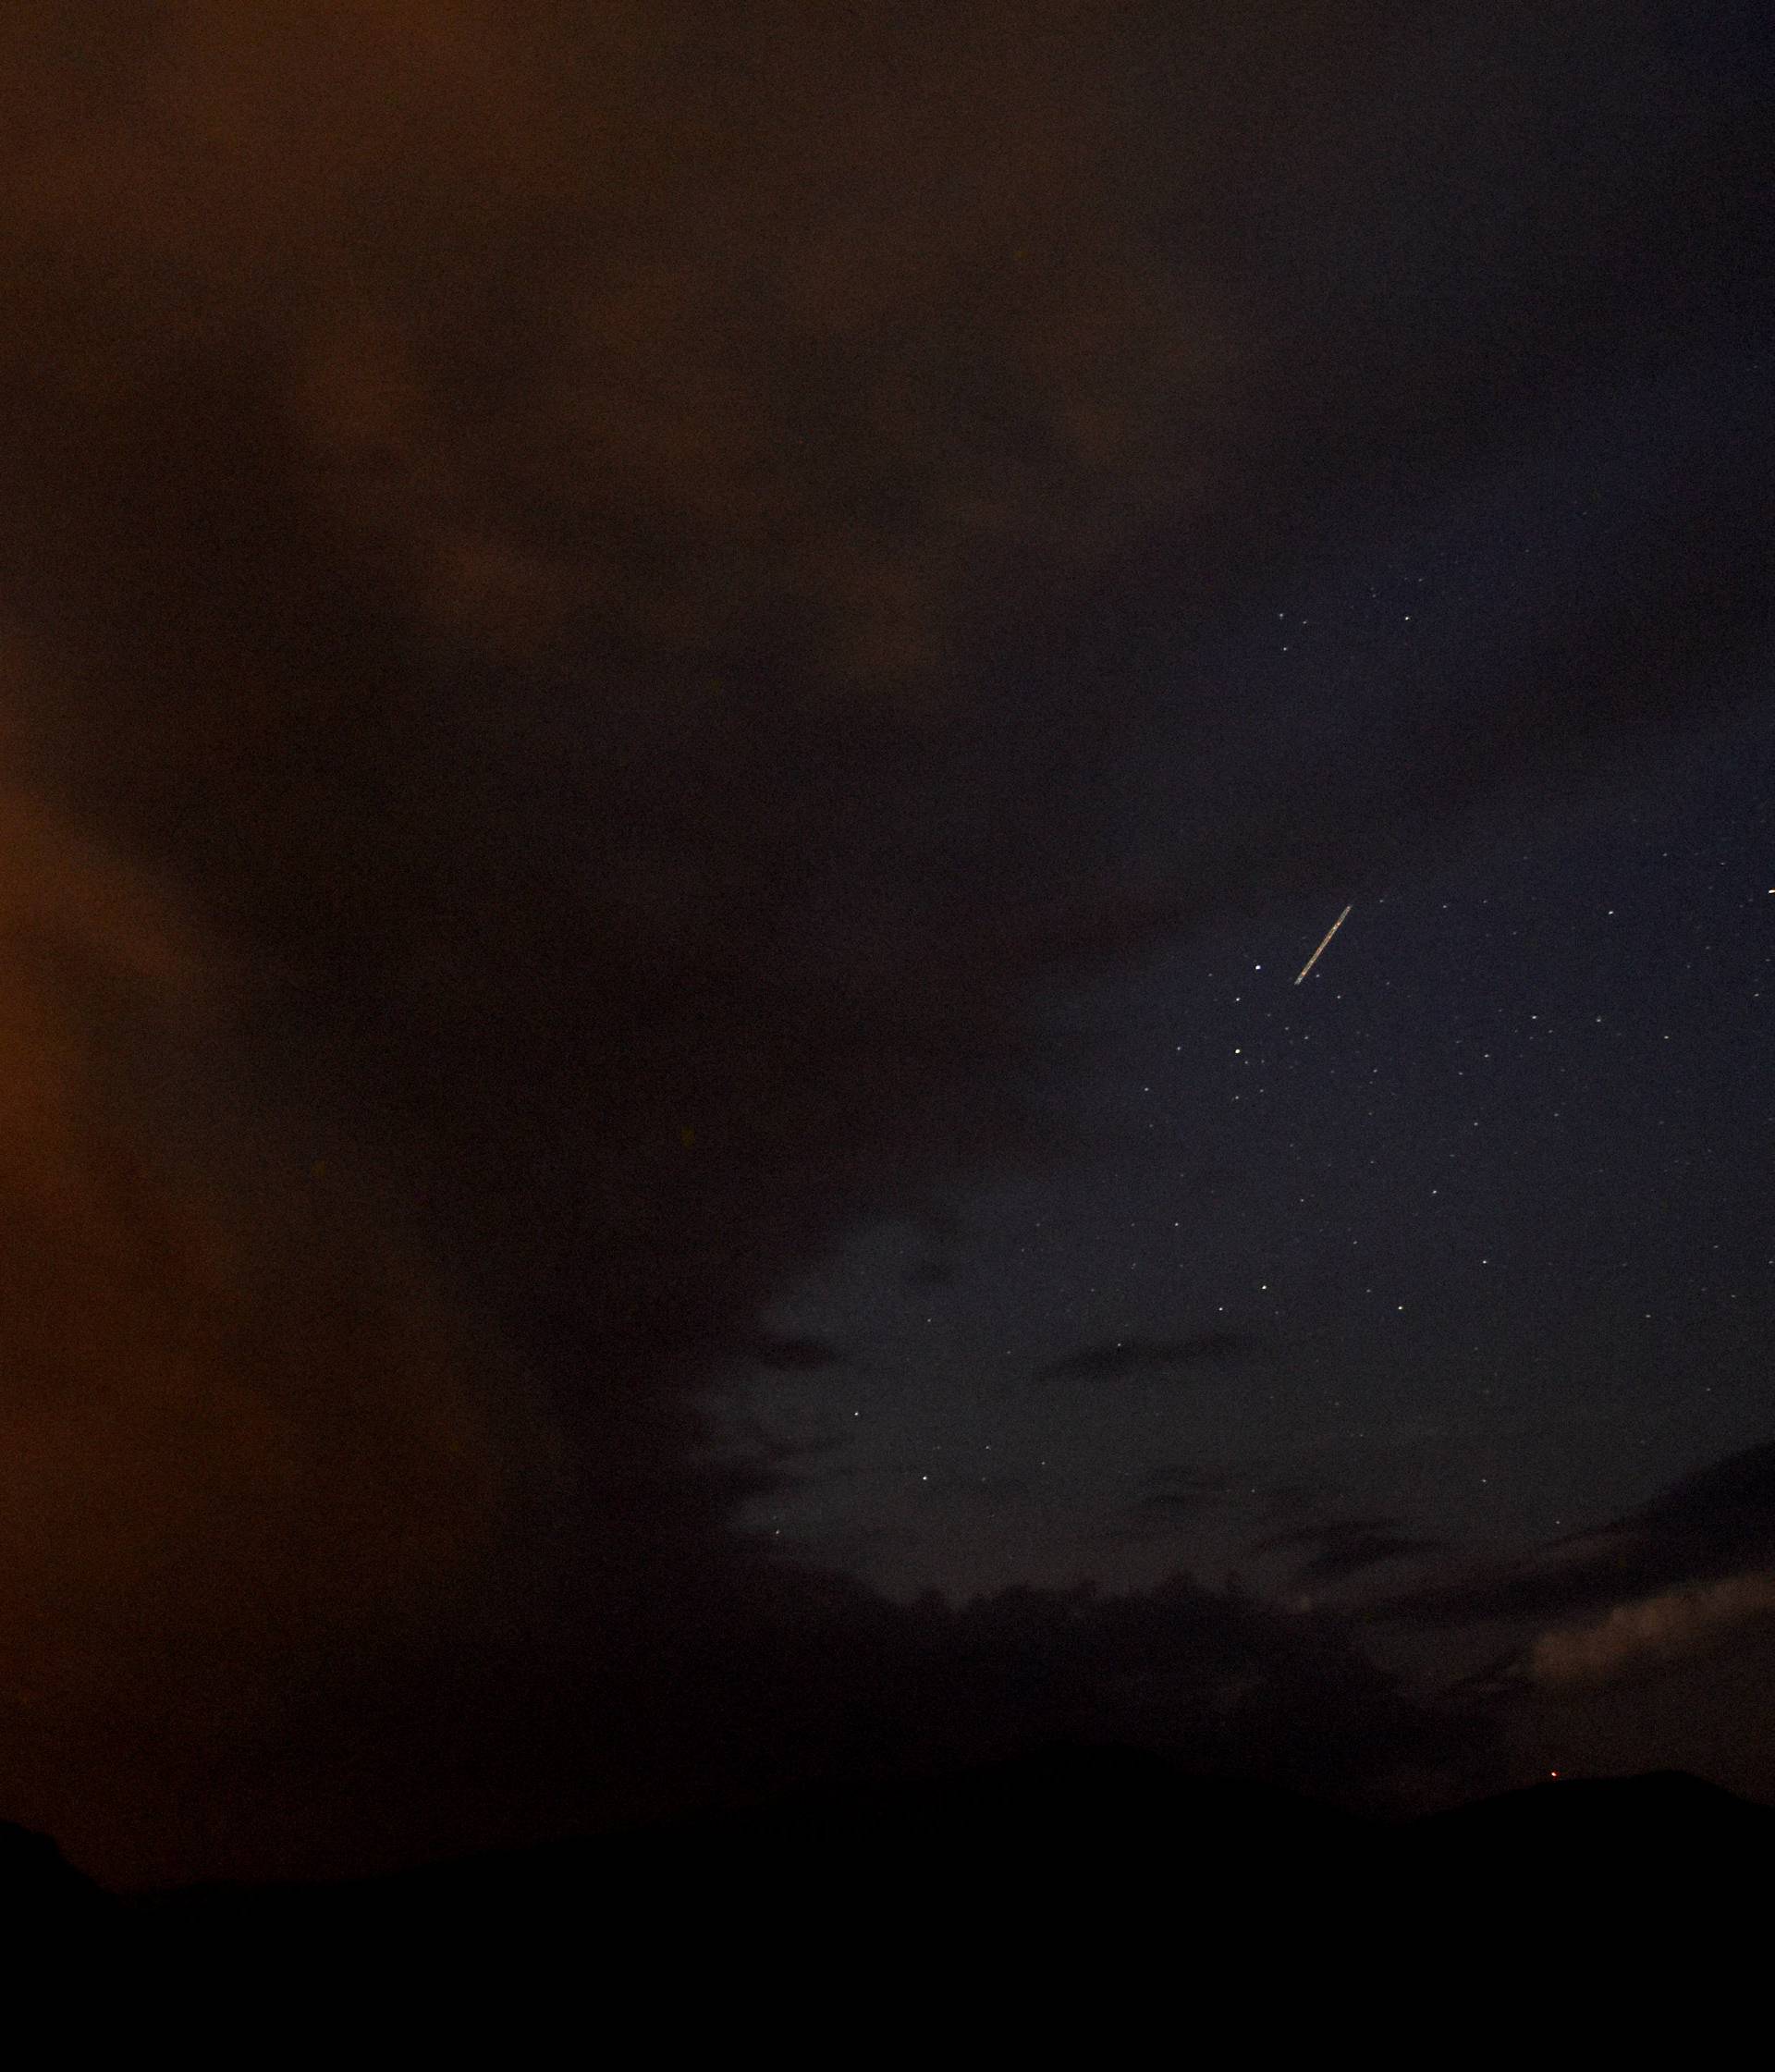 A meteor streaks past stars in cloudy night sky during the annual Perseid meteor shower, near Skopje, Macedonia